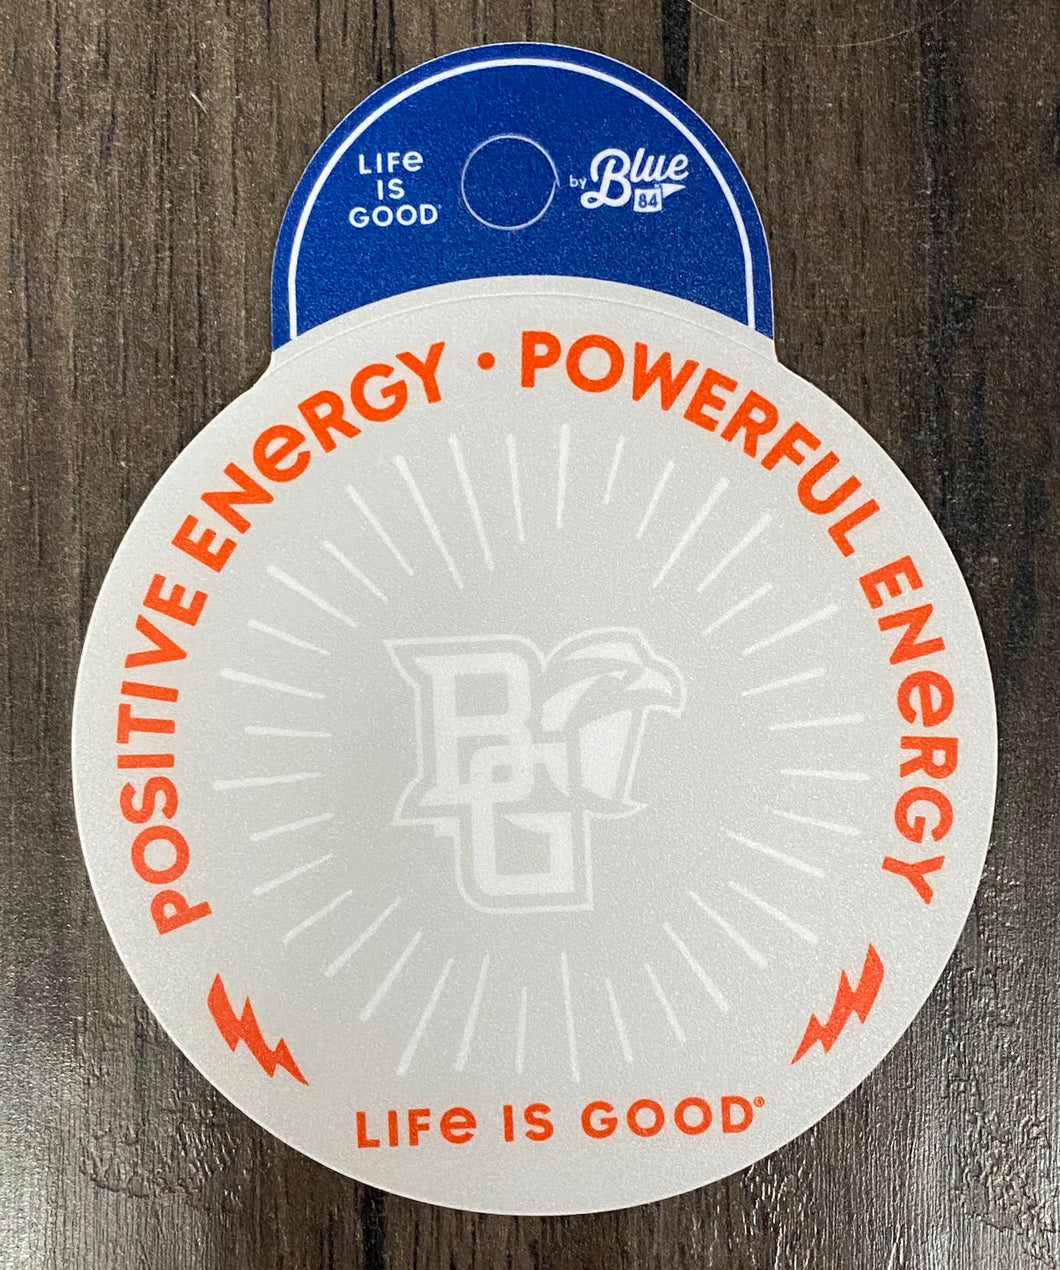 Blue 84 Life is Good Positive Energy Sticker